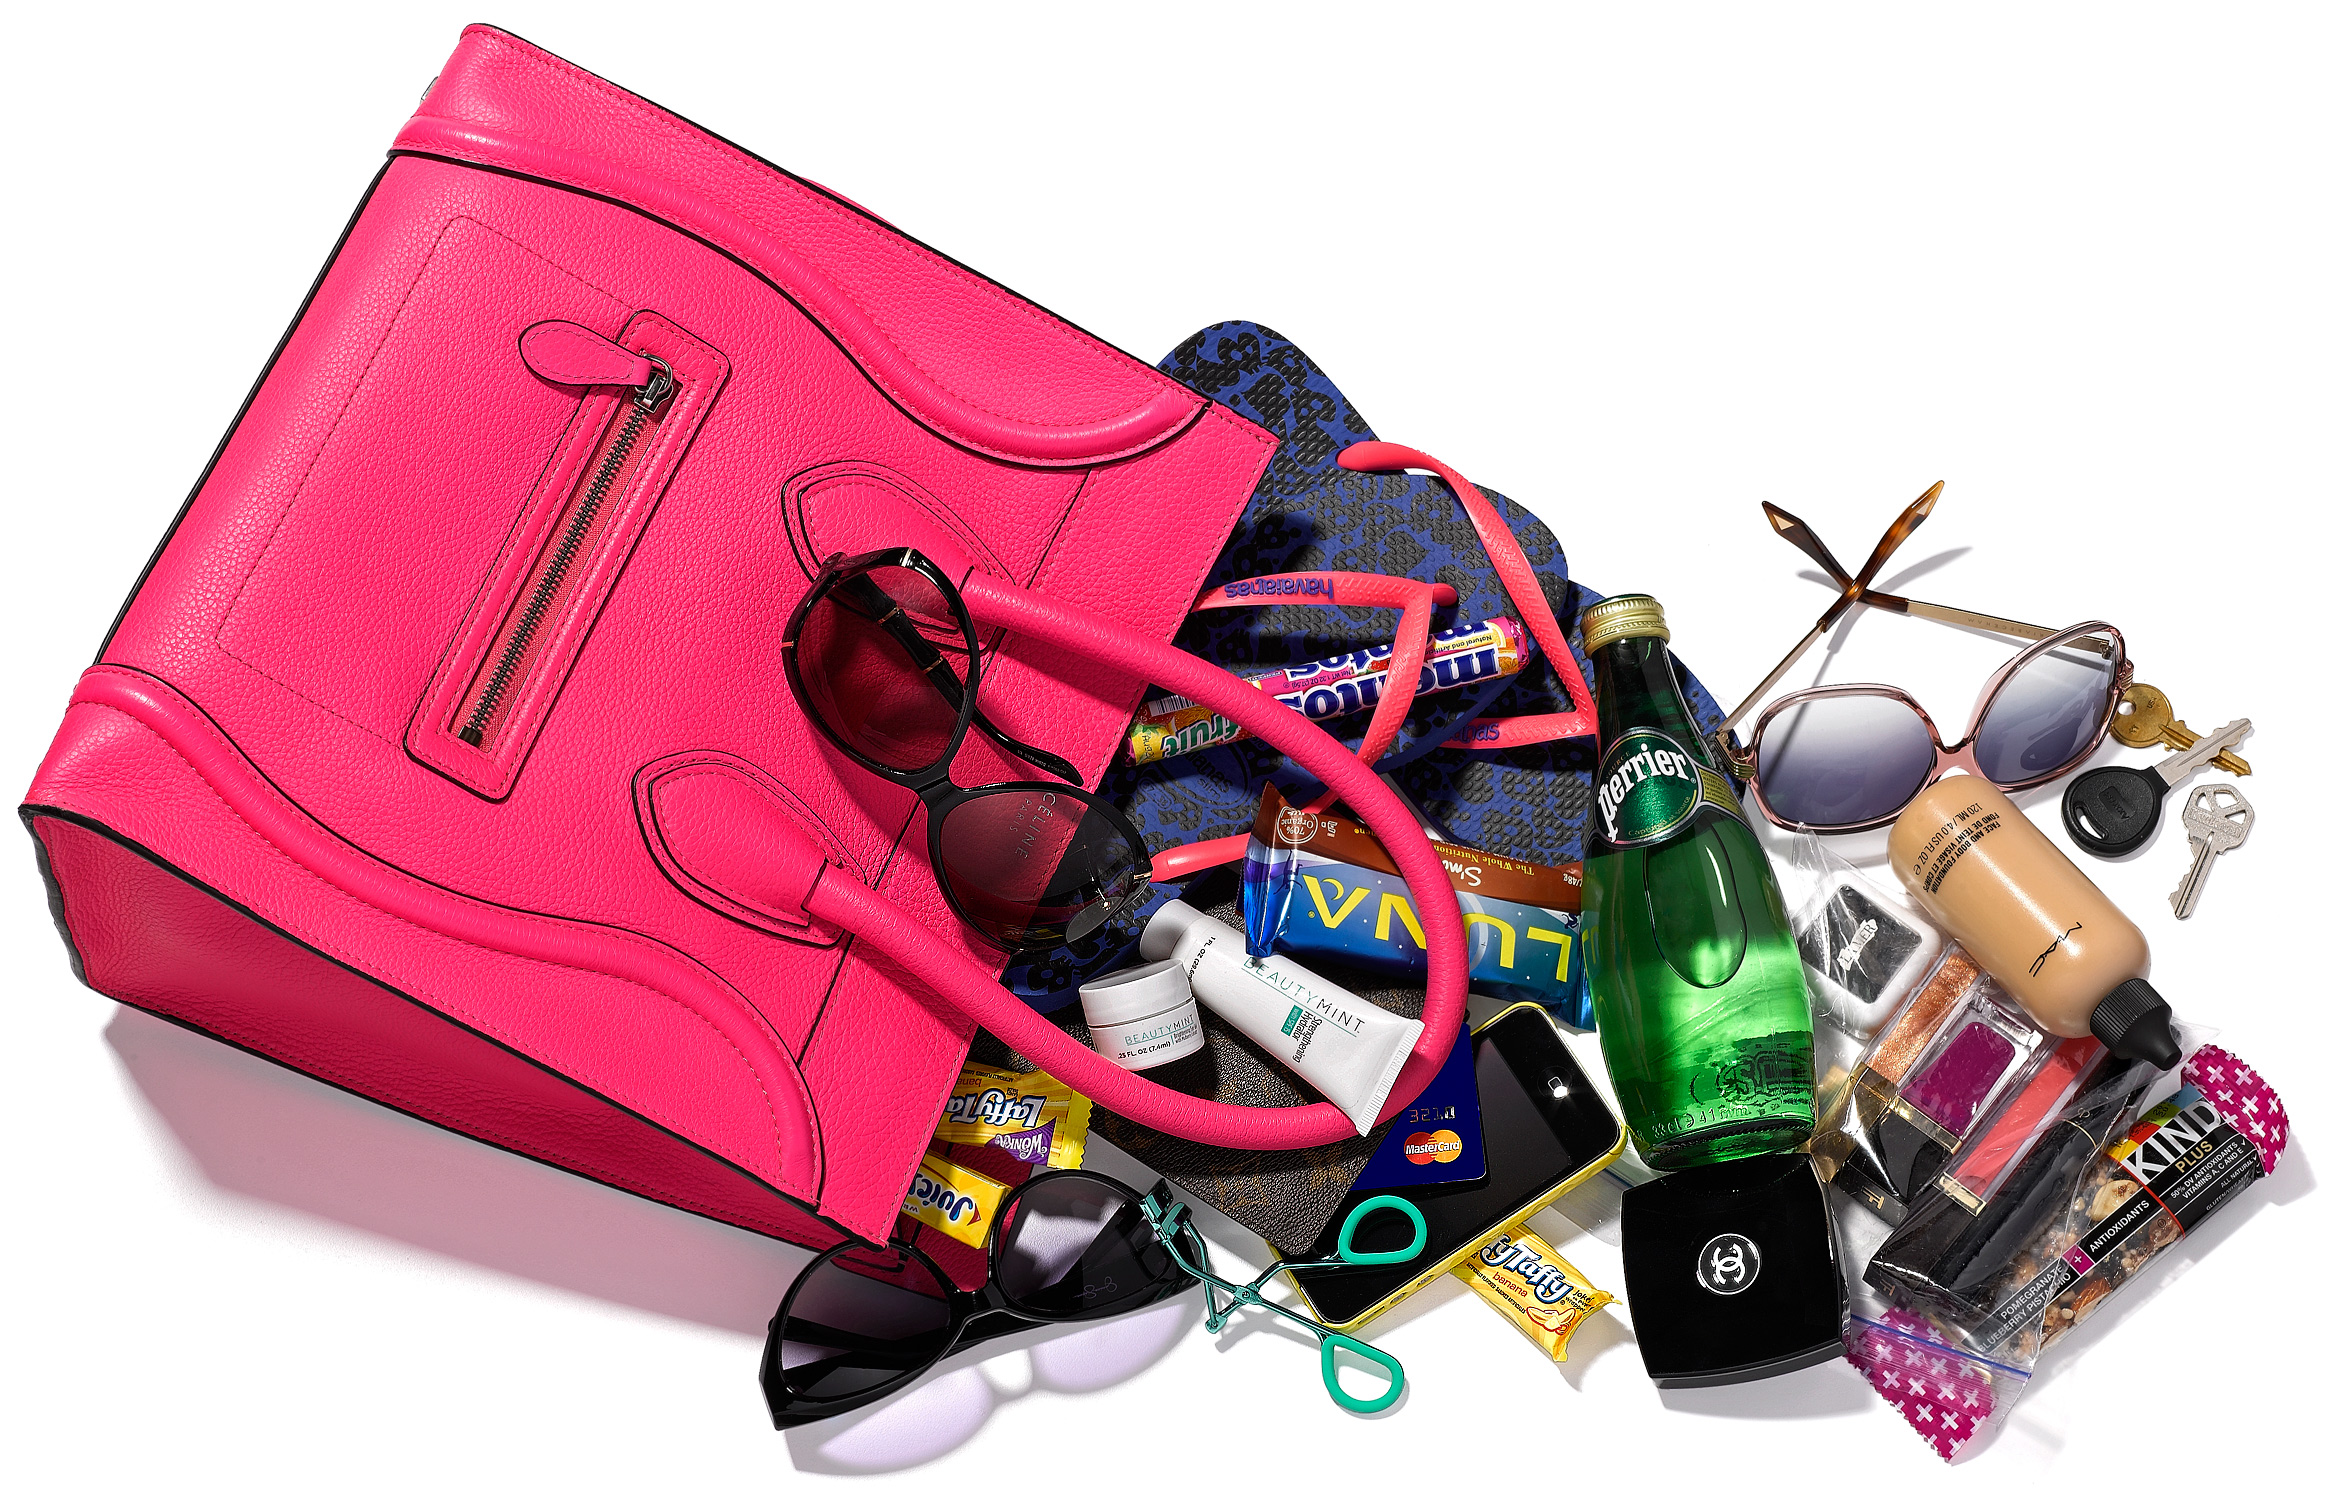 Pink Jessica Simpson purse | Jessica simpson purses, Clothes design, Purses